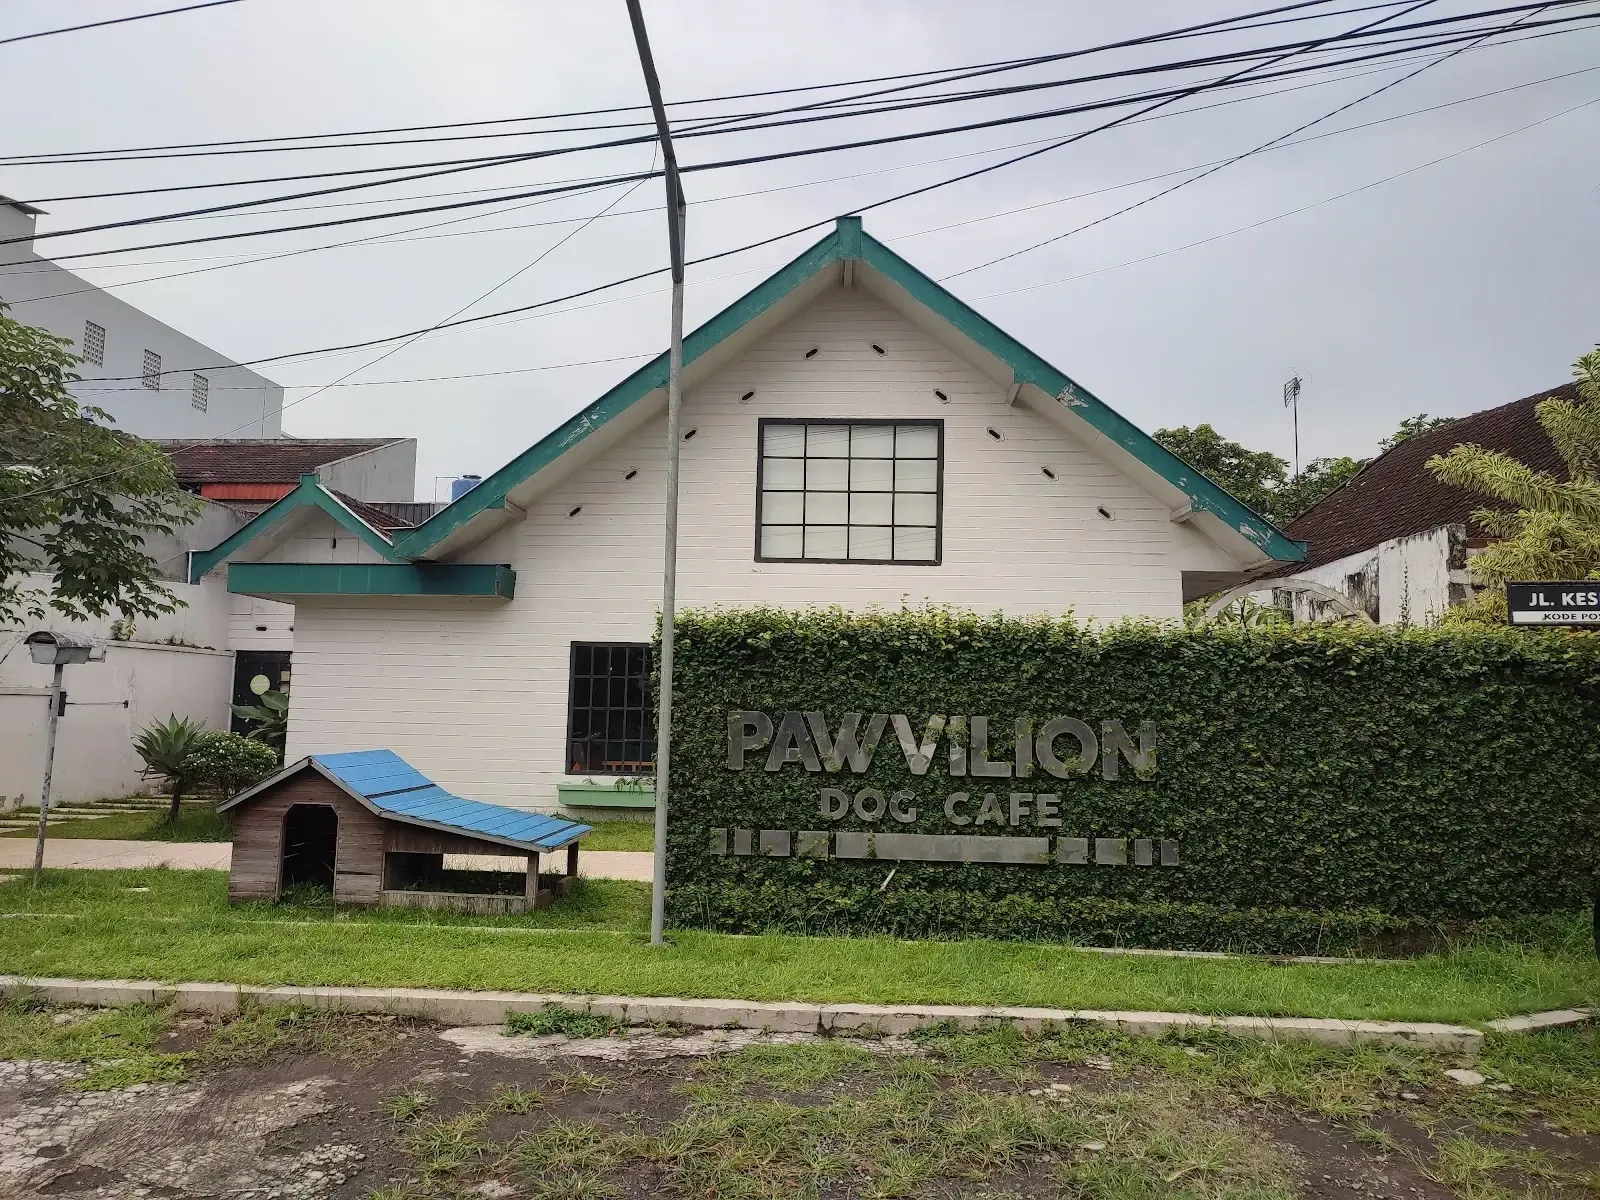 Pawvilion Dog Cafe front Store